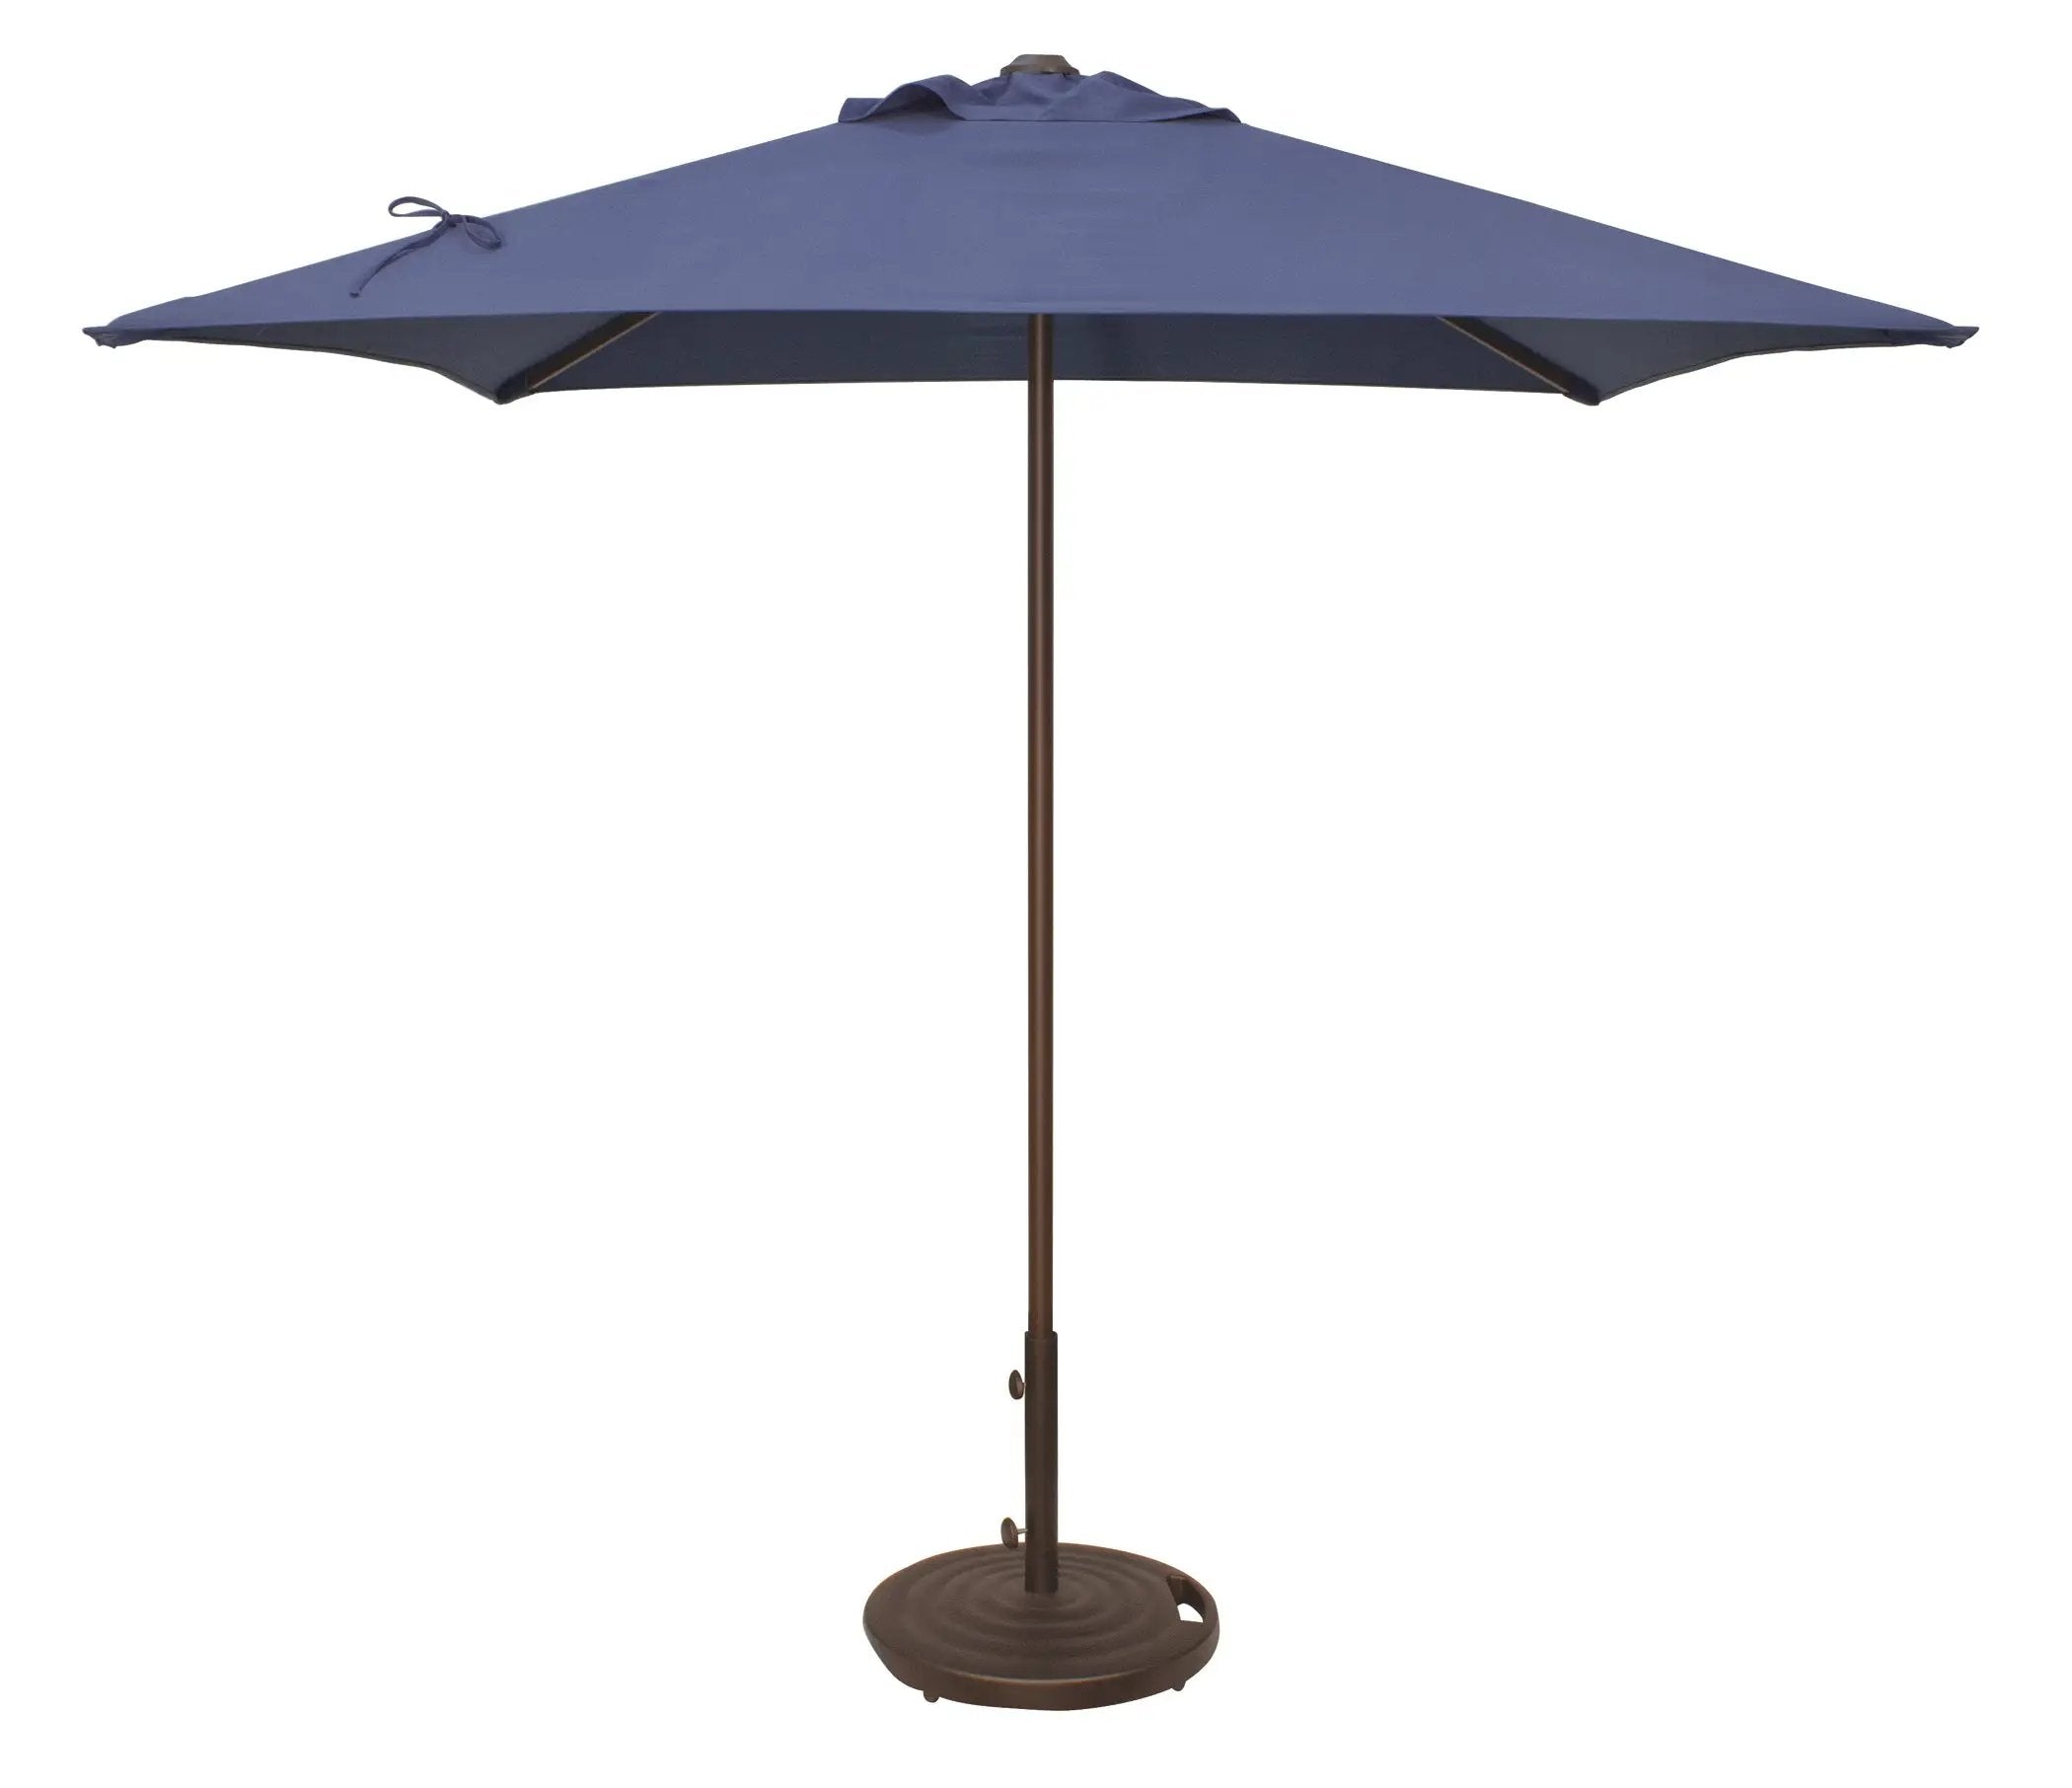 7' Square Commercial Umbrella by Treasure Garden